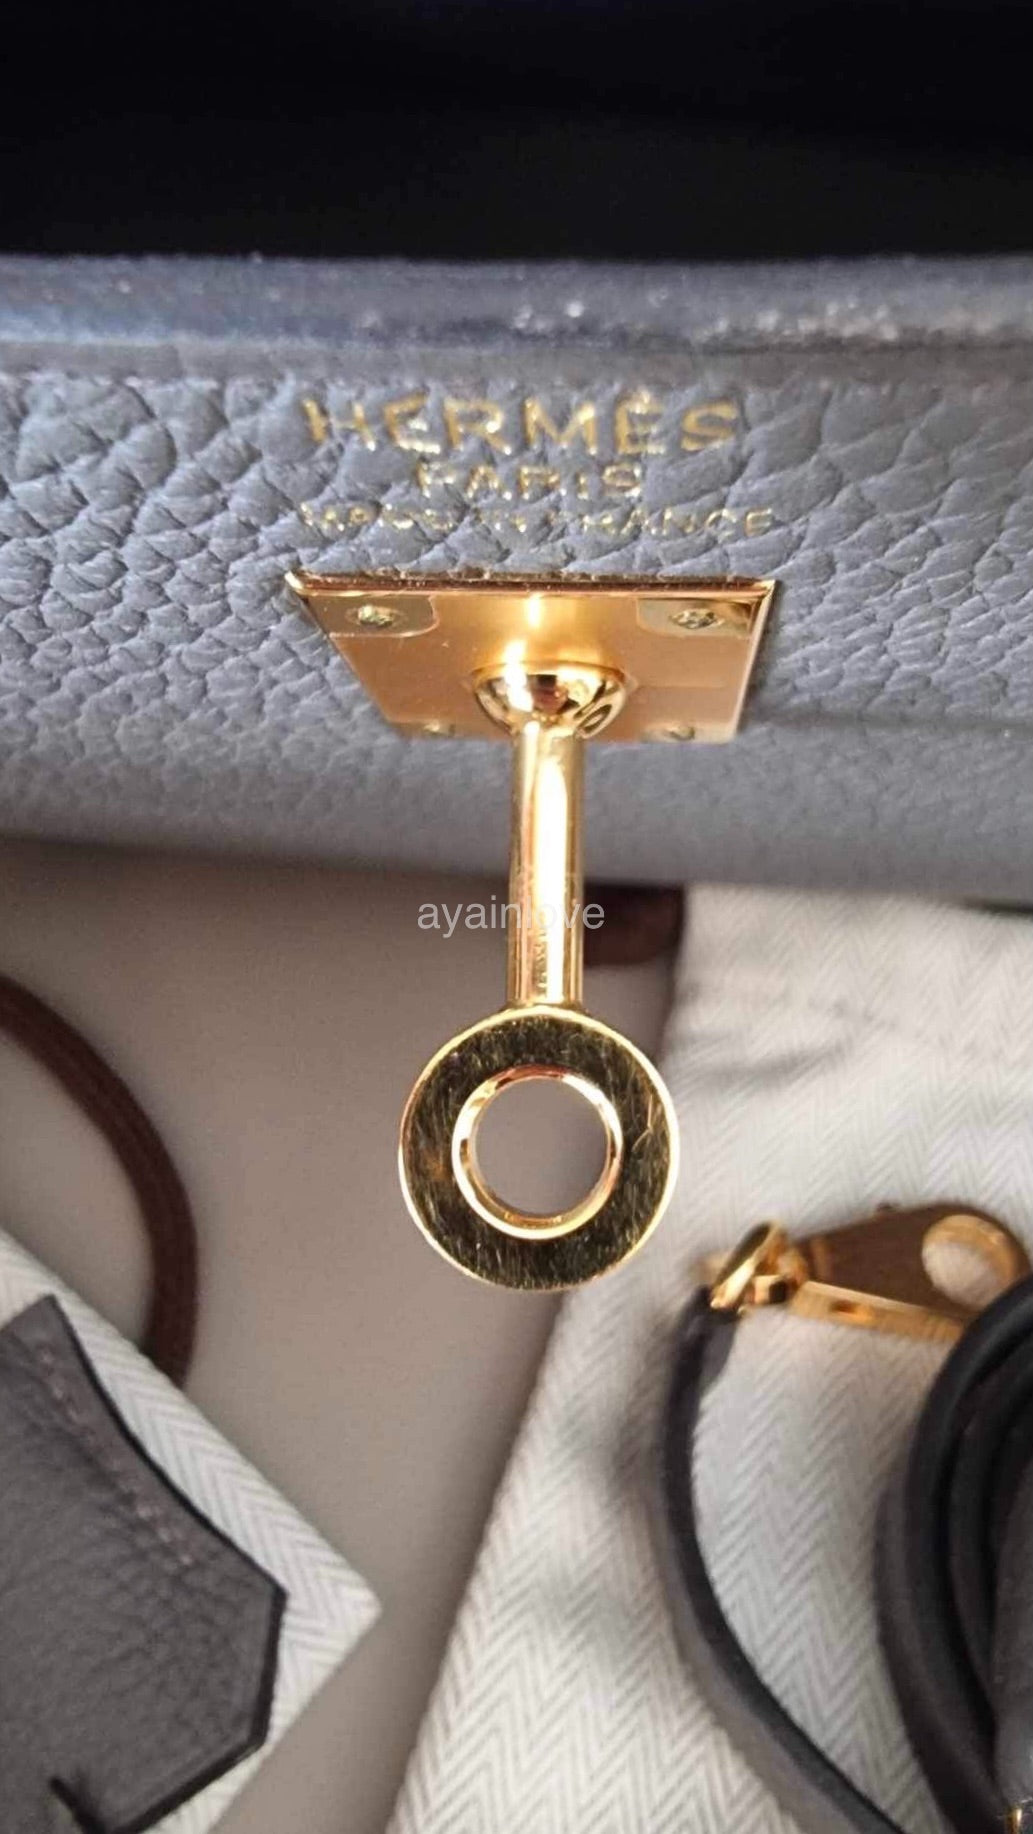 Hermes Birkin 25 Bag Etain Gold Hardware Togo Leather New w/Box